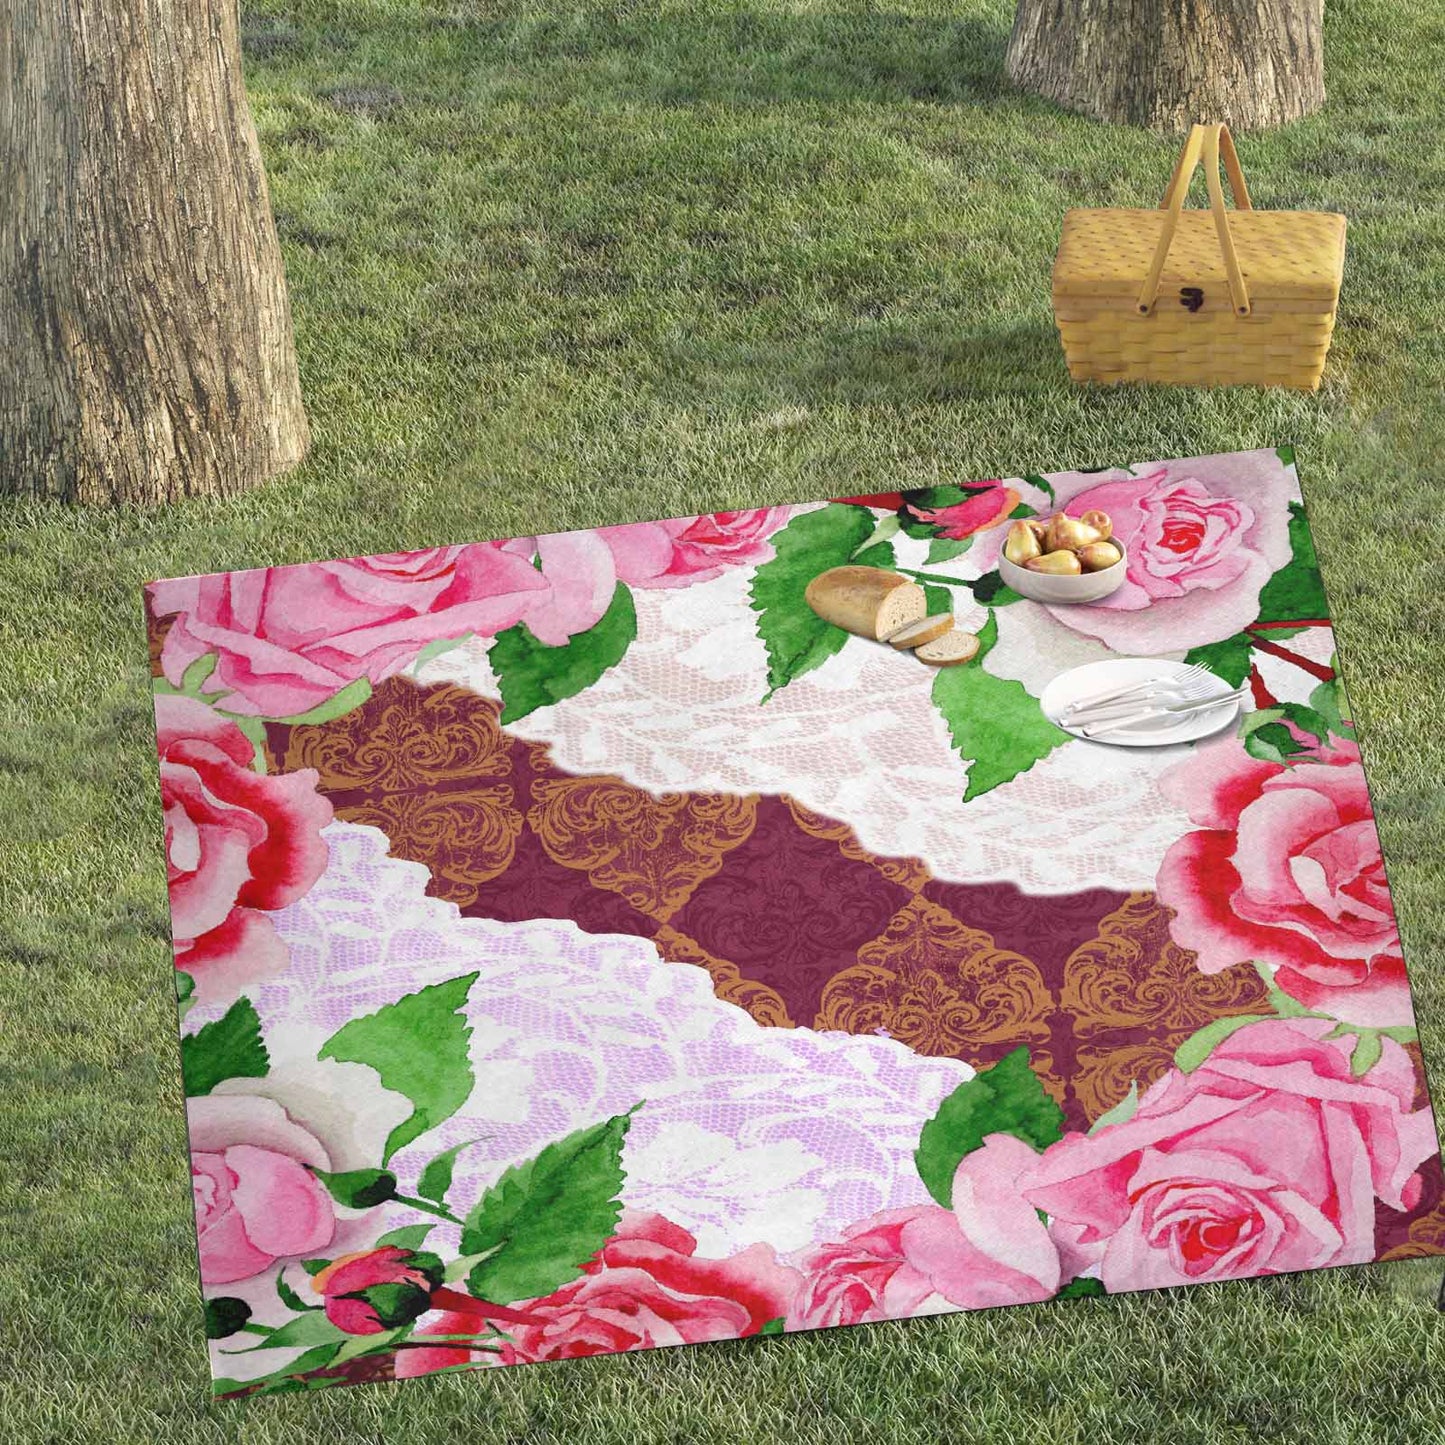 Victorian lace print waterproof picnic mat, 69 x 55in, design 19